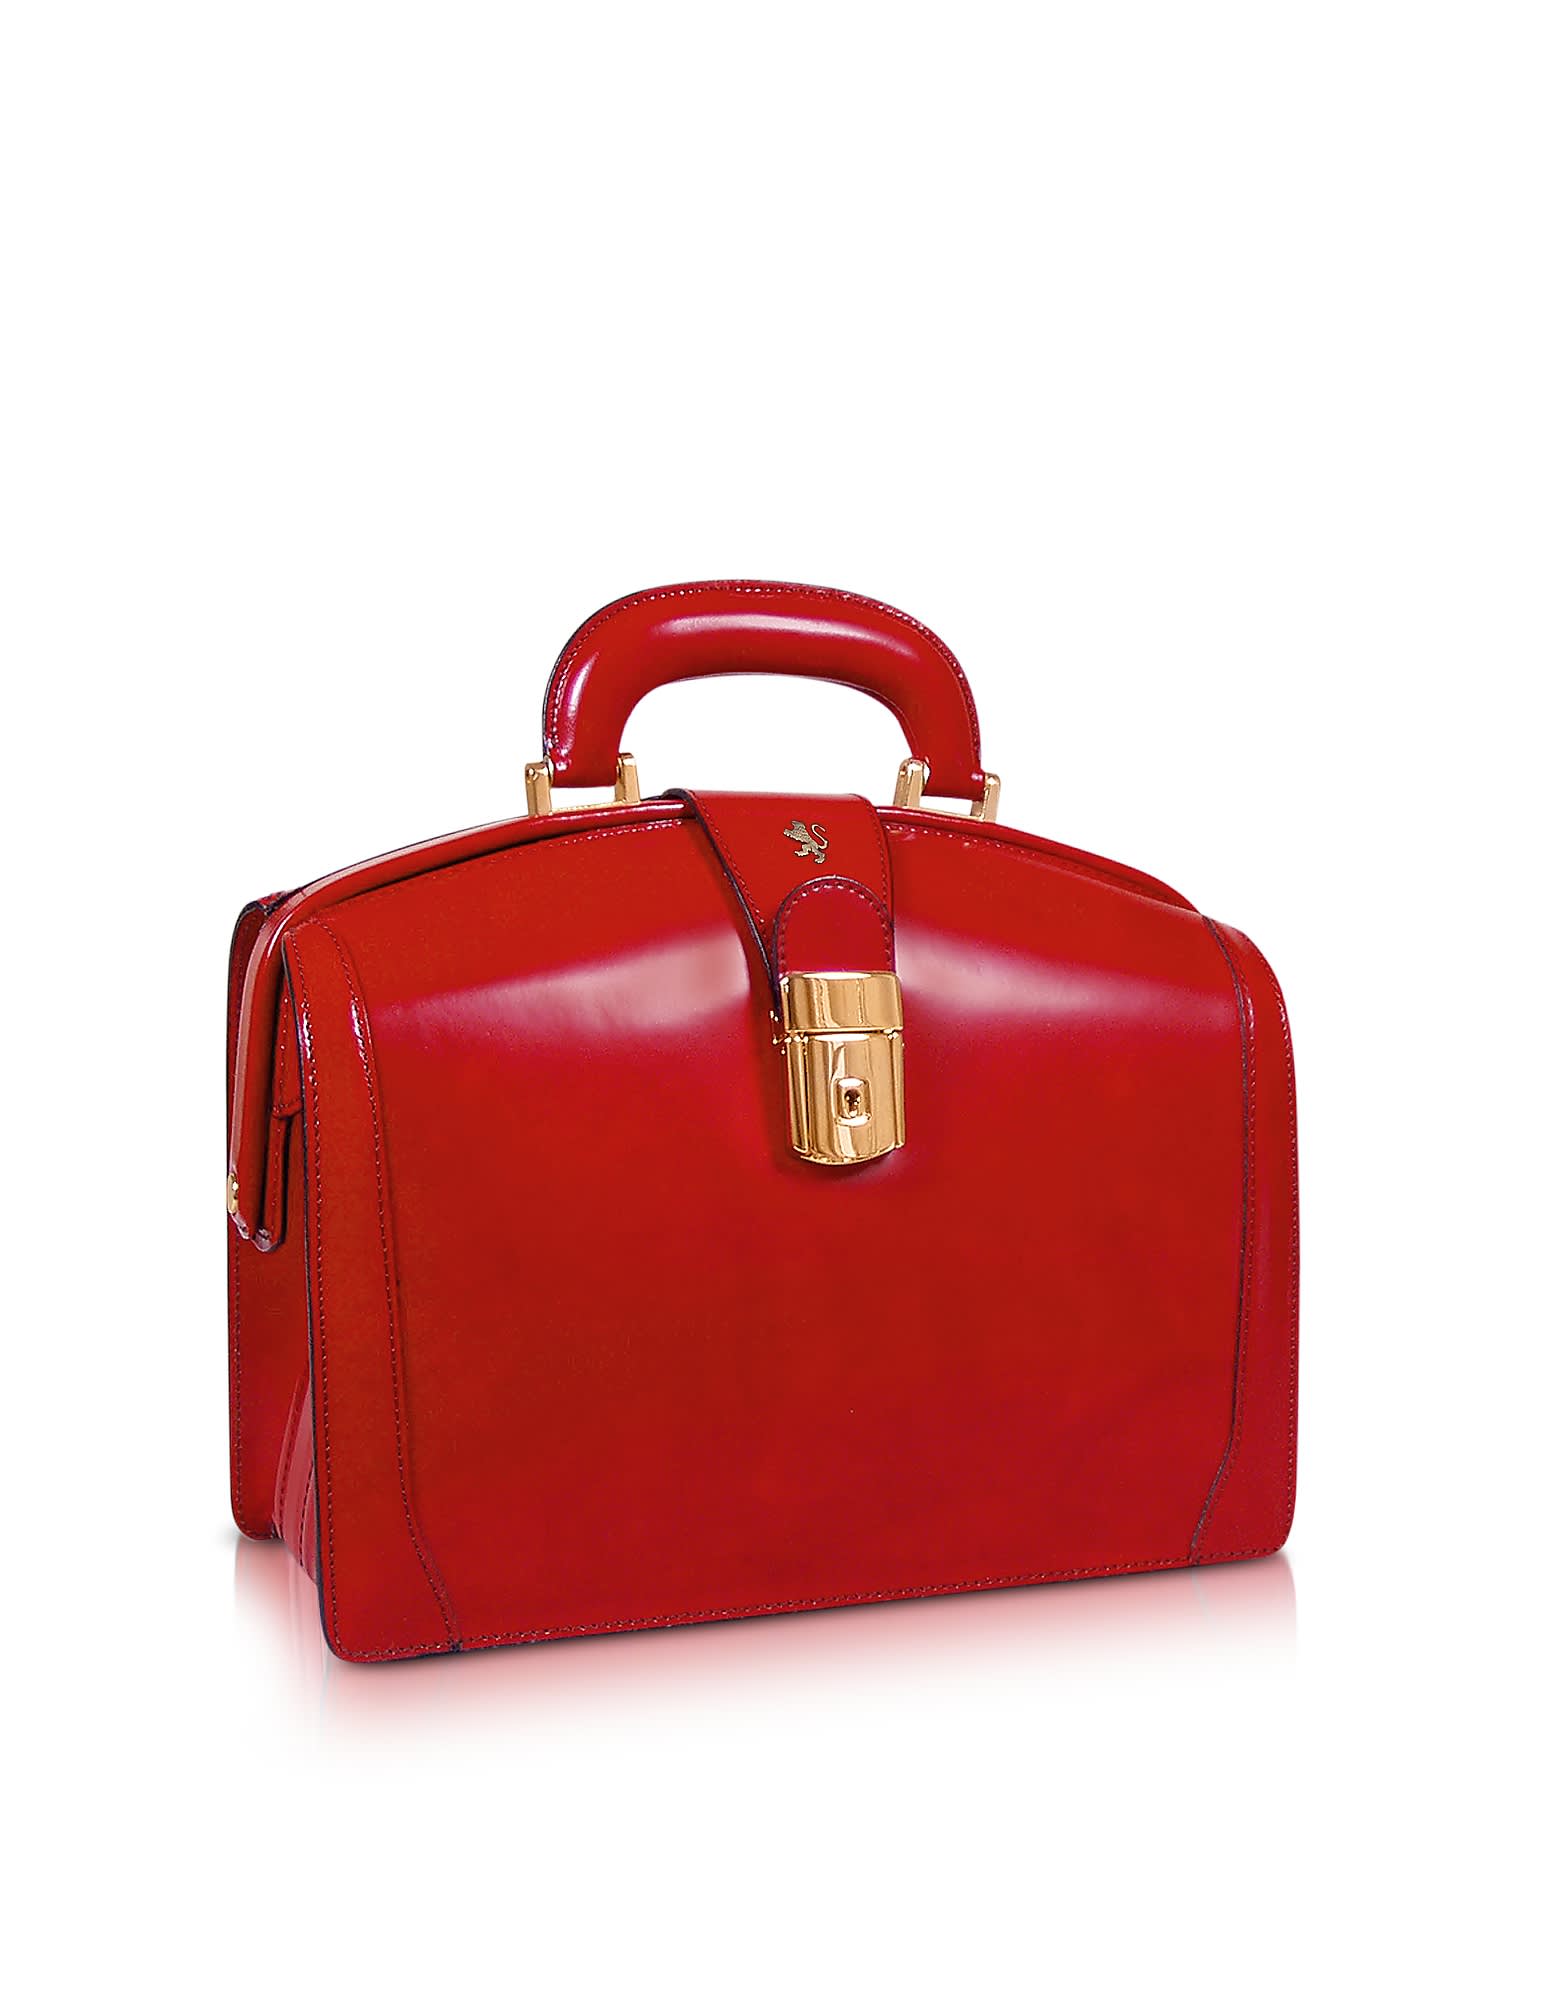 Pratesi Ladies Polished Italian Leather Briefcase